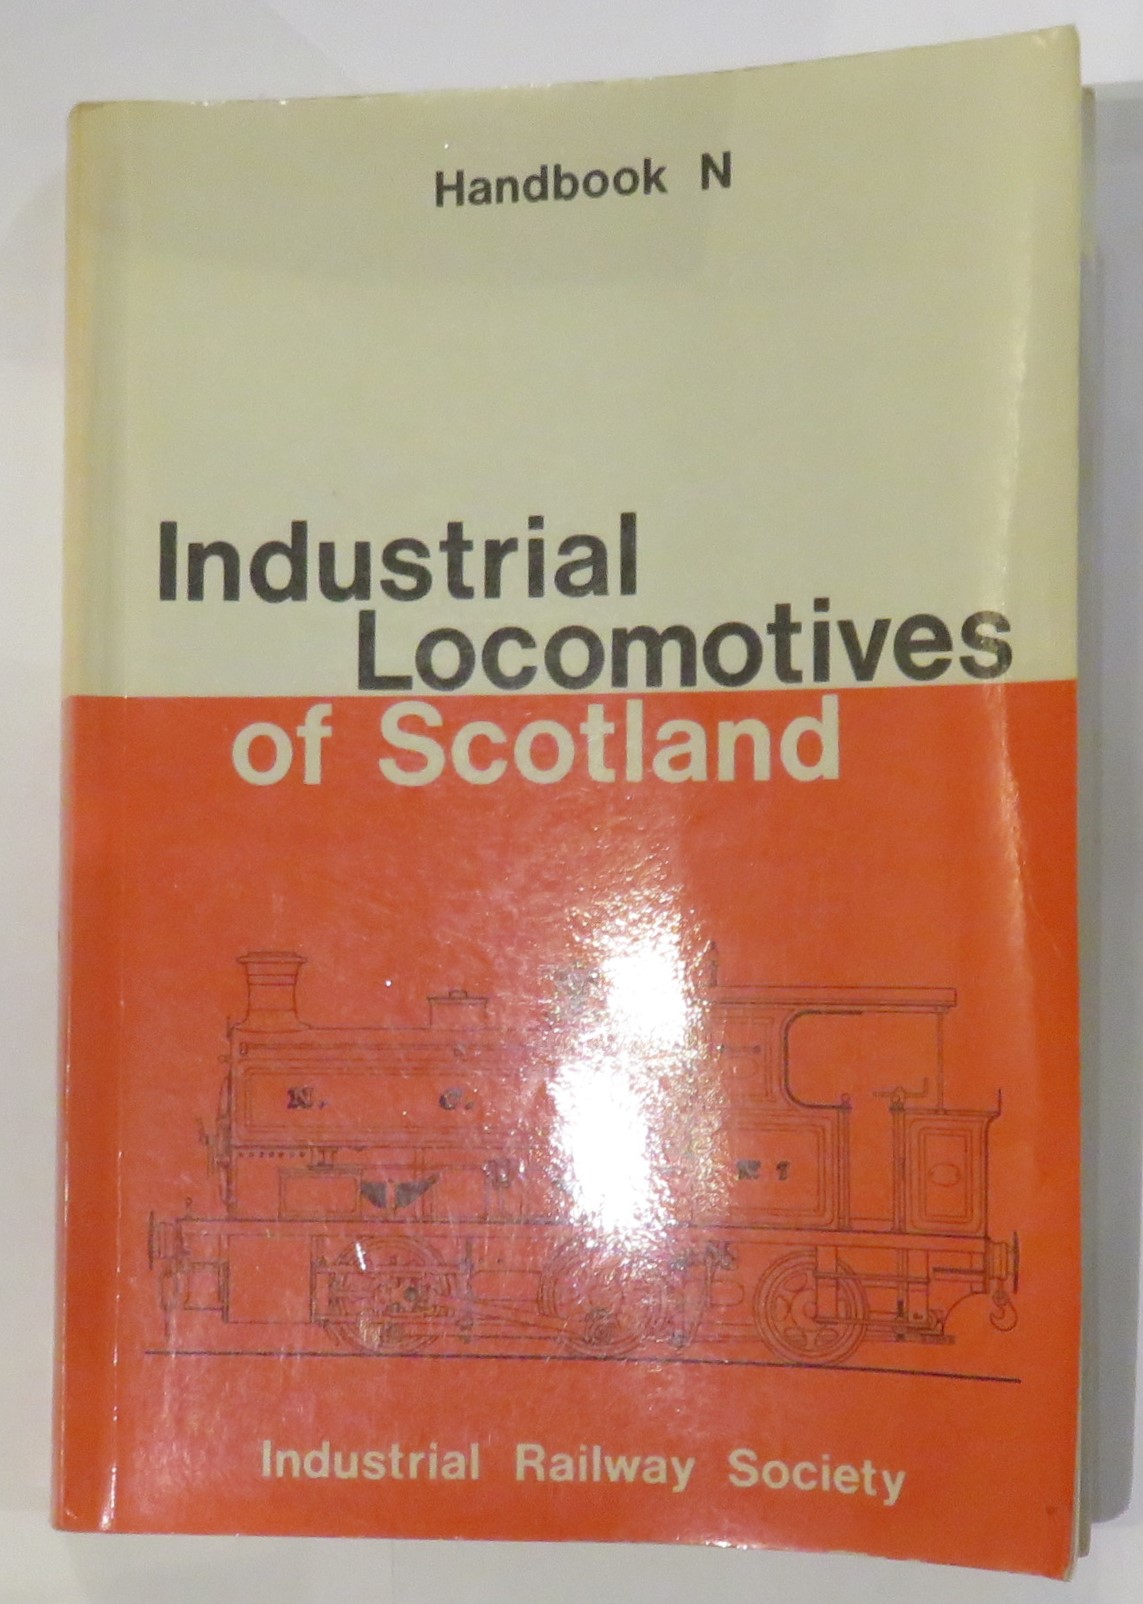 Handbook N: Industrial Locomotives of Scotland